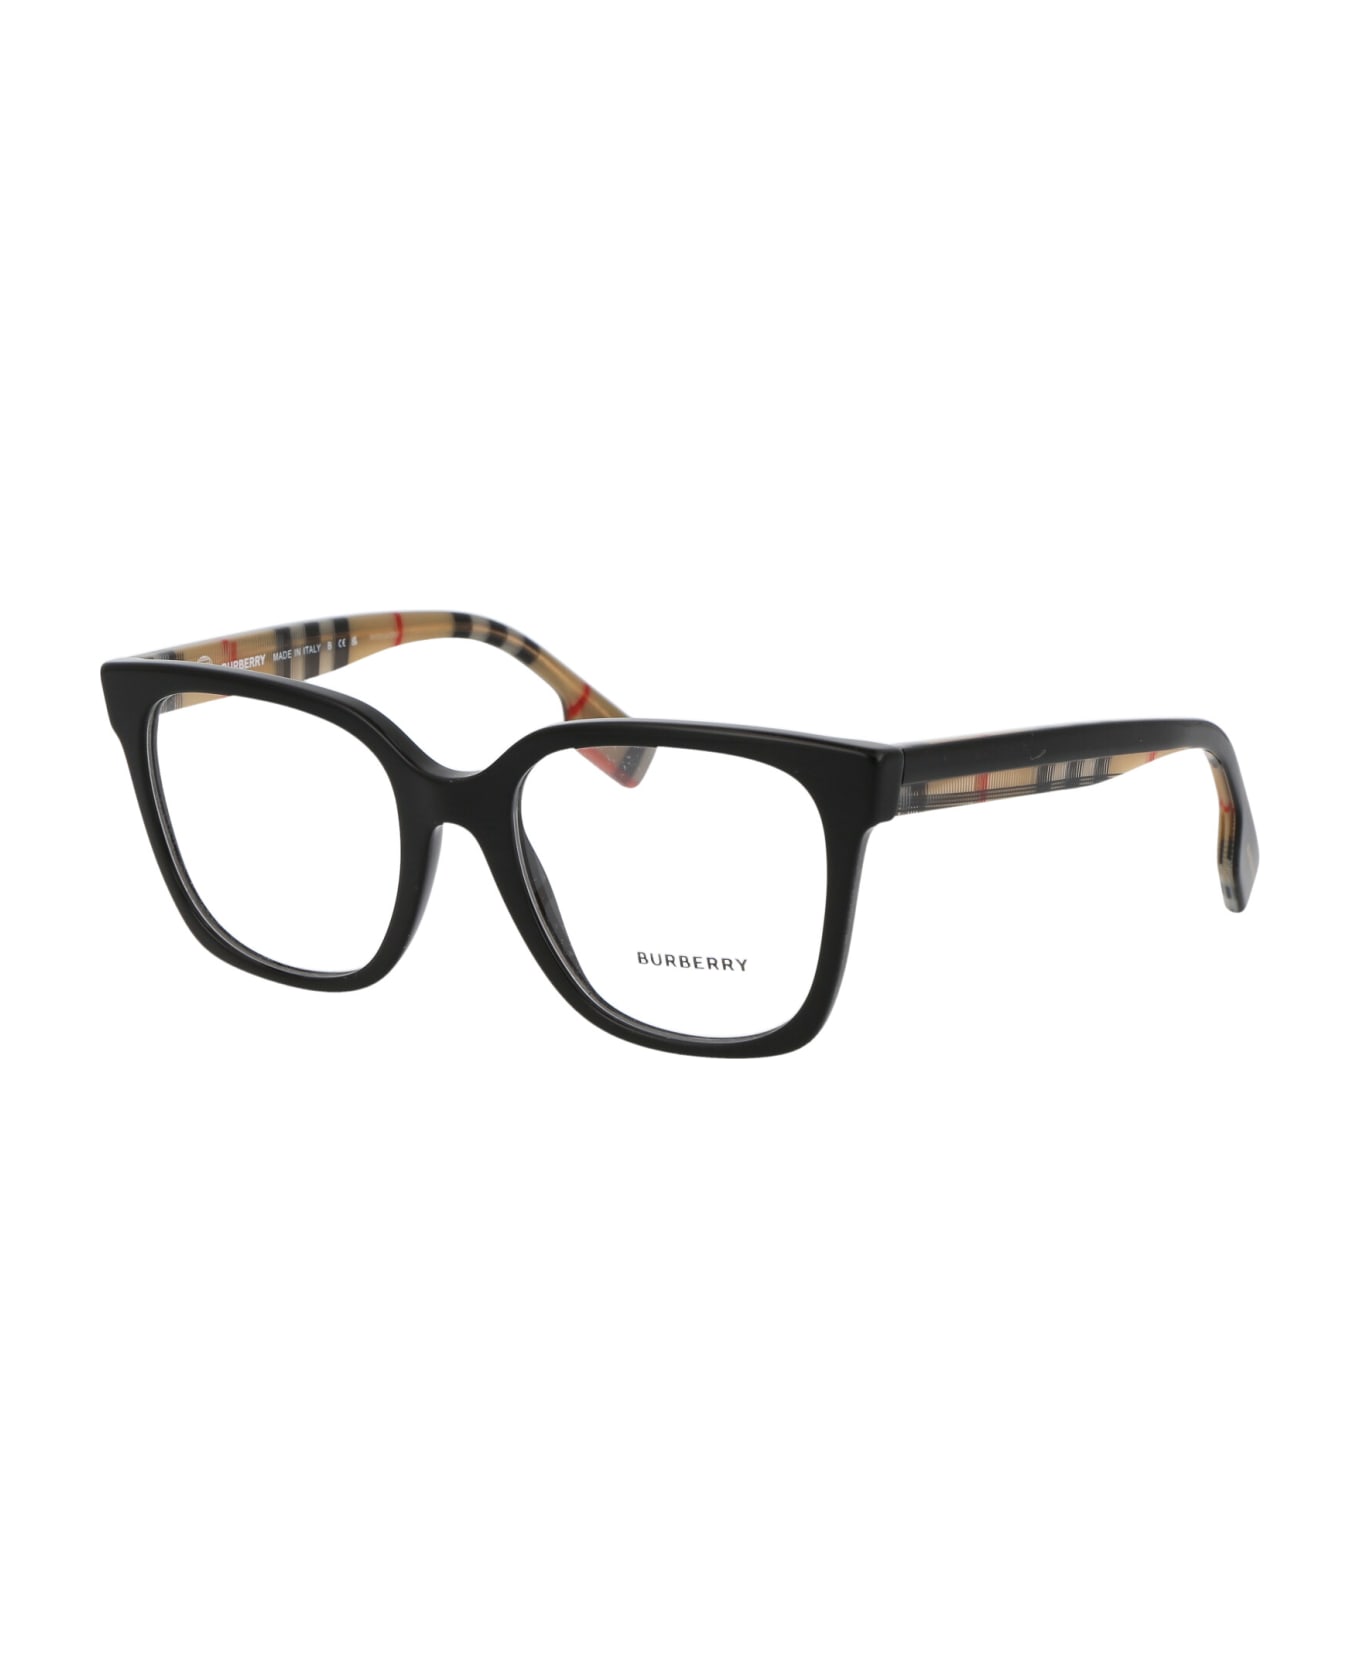 Burberry Eyewear Evelyn Glasses - 3942 BLACK